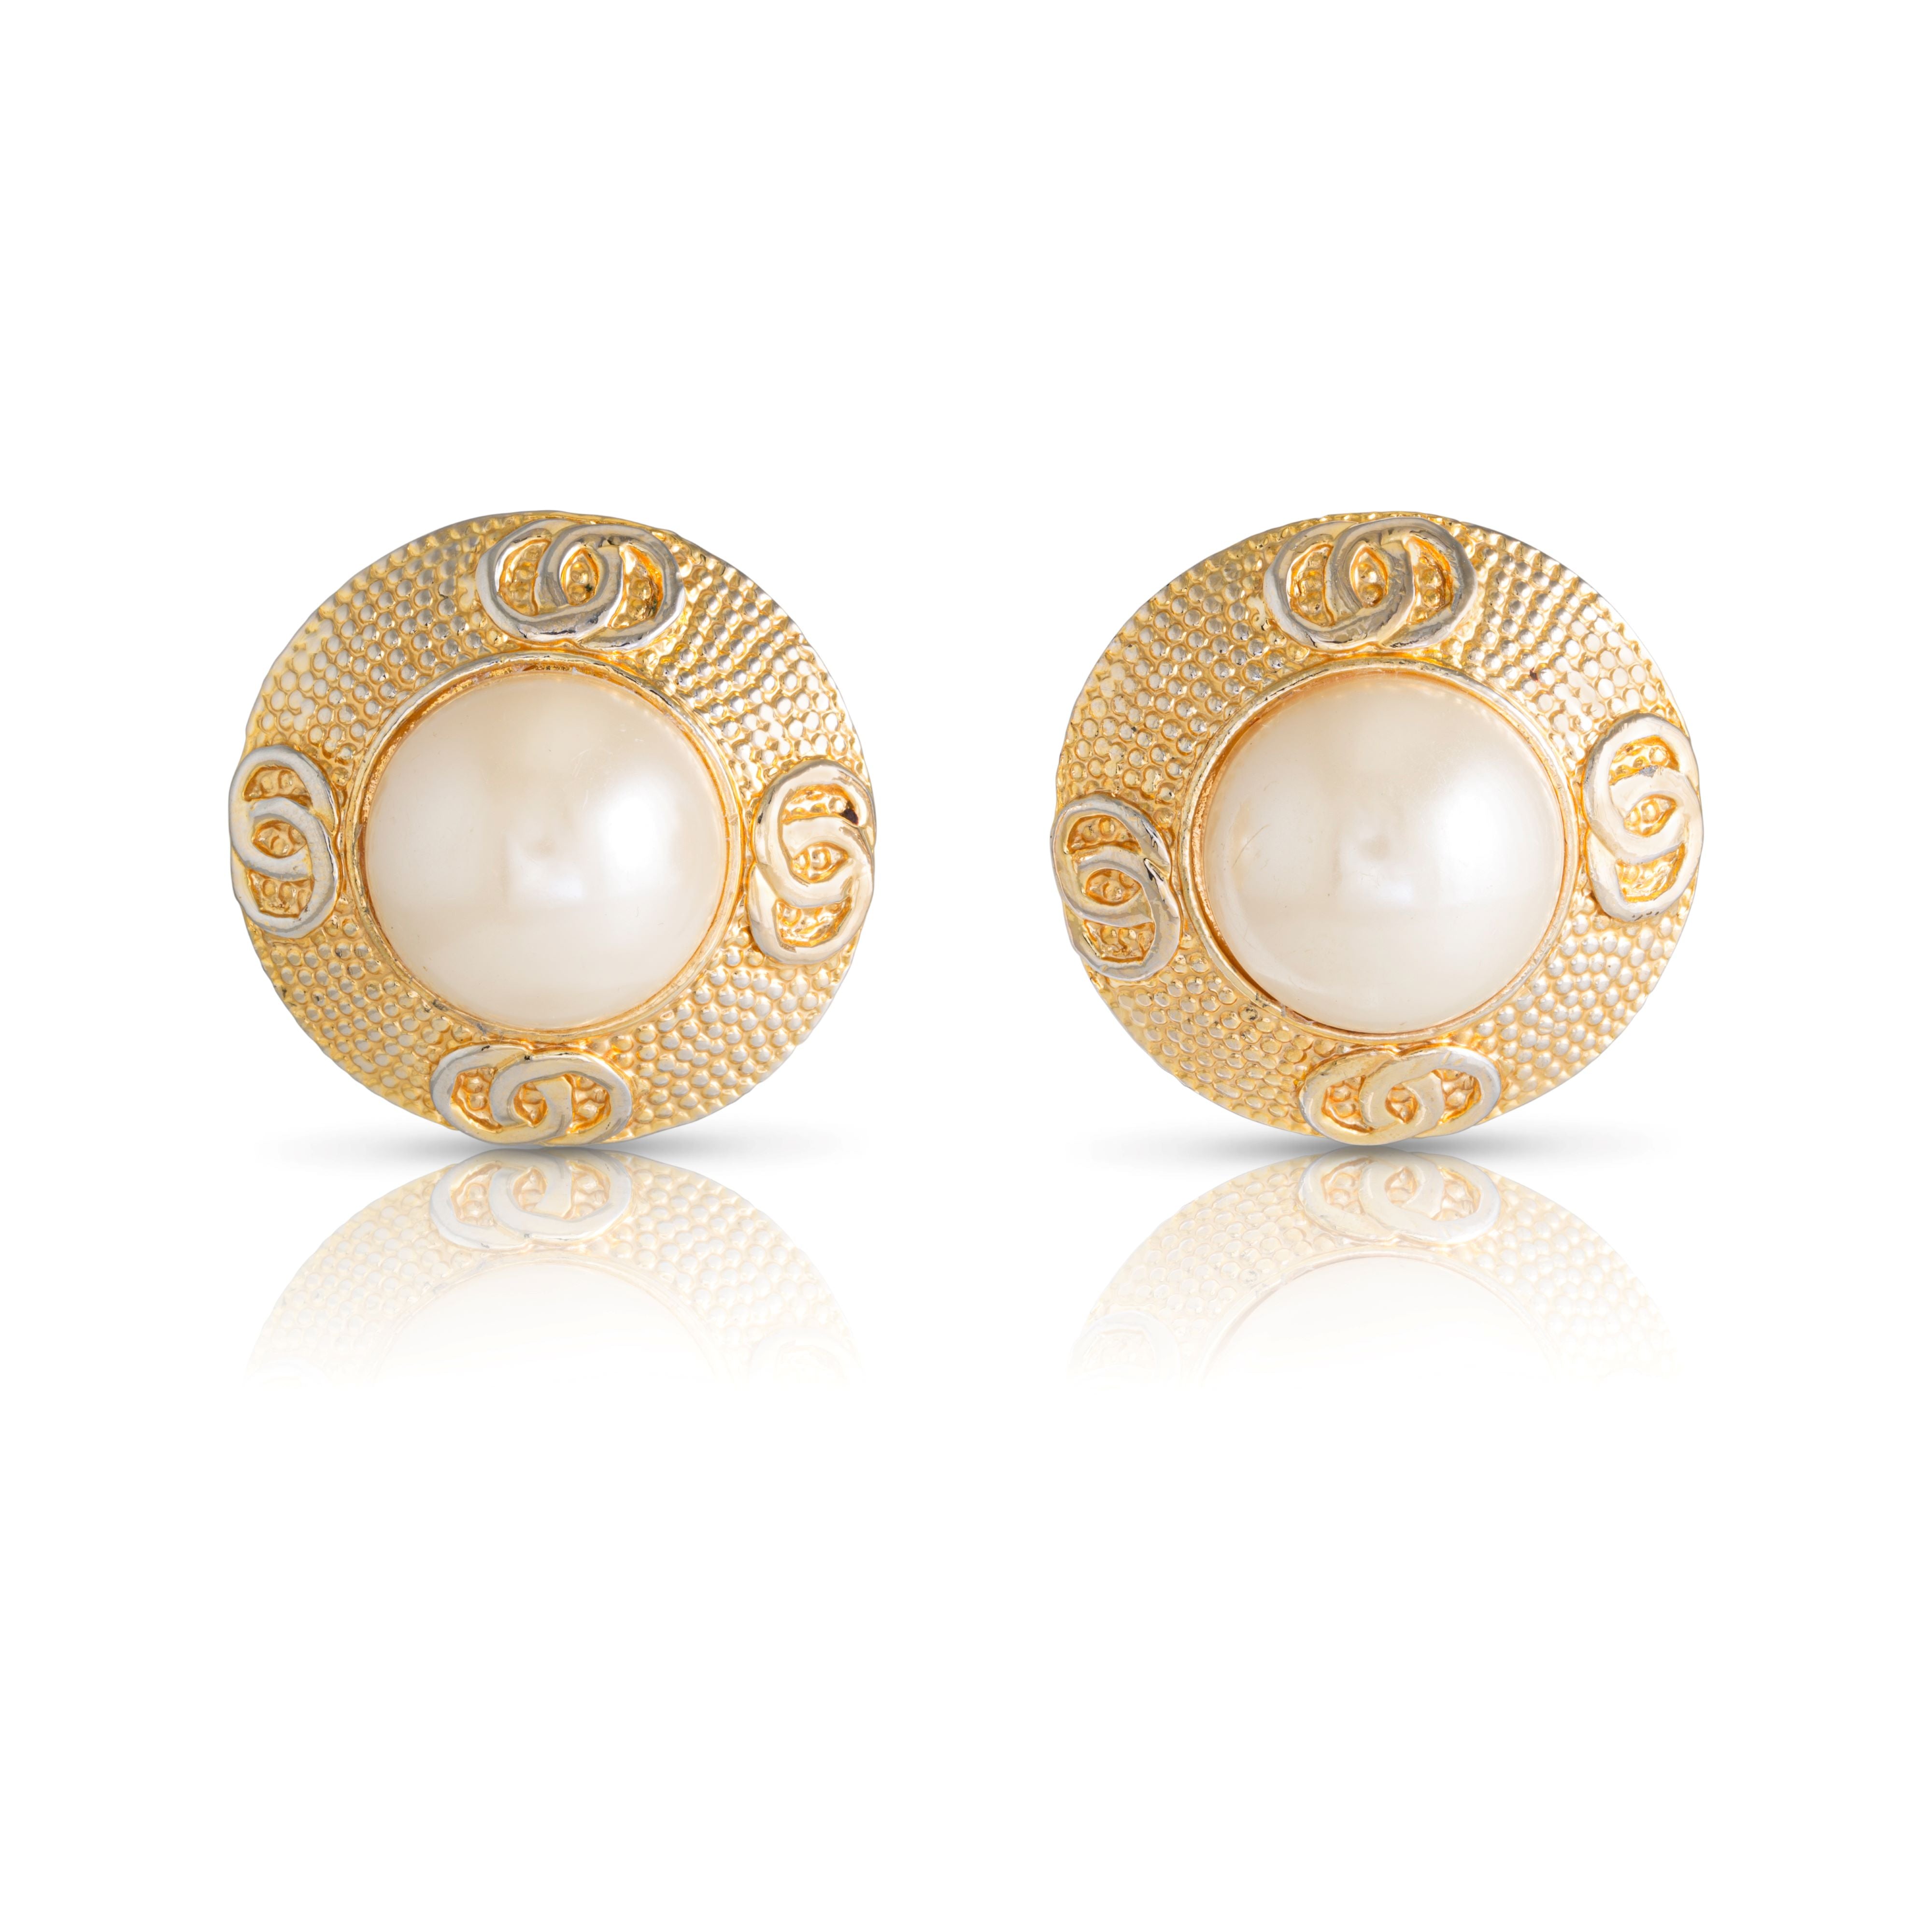 Vintage Chanel-inspired faux pearl earrings